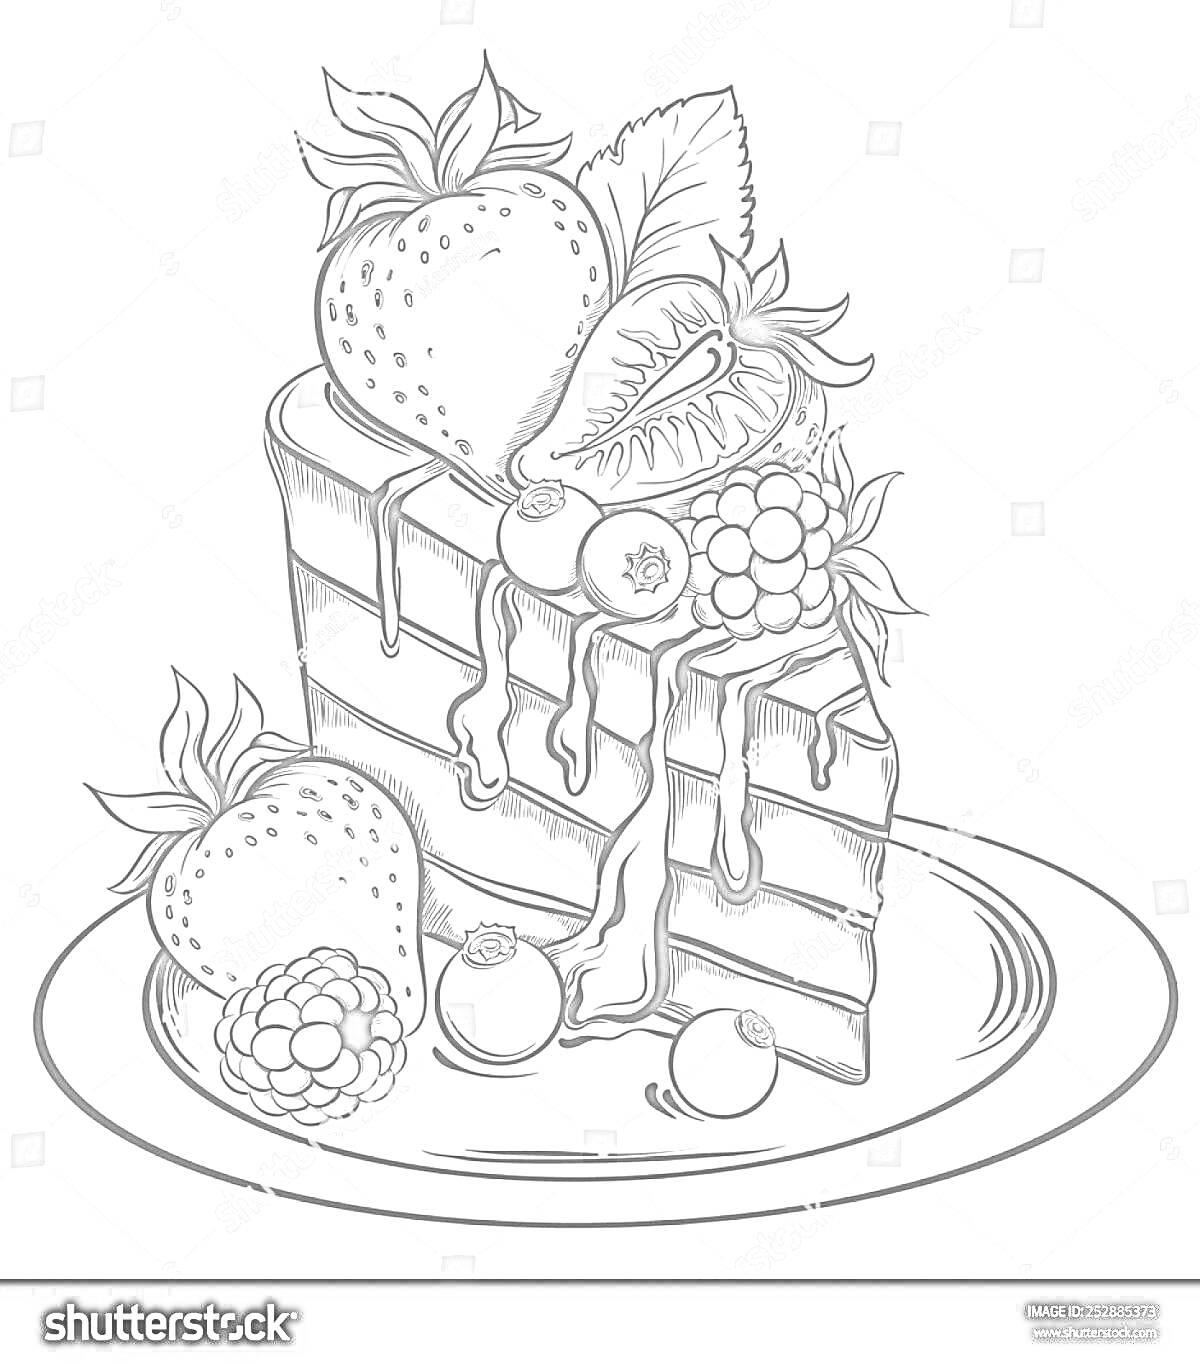 На раскраске изображено: Торт, Кусок торта, Ягоды, Клубника, Малина, Черника, Еда